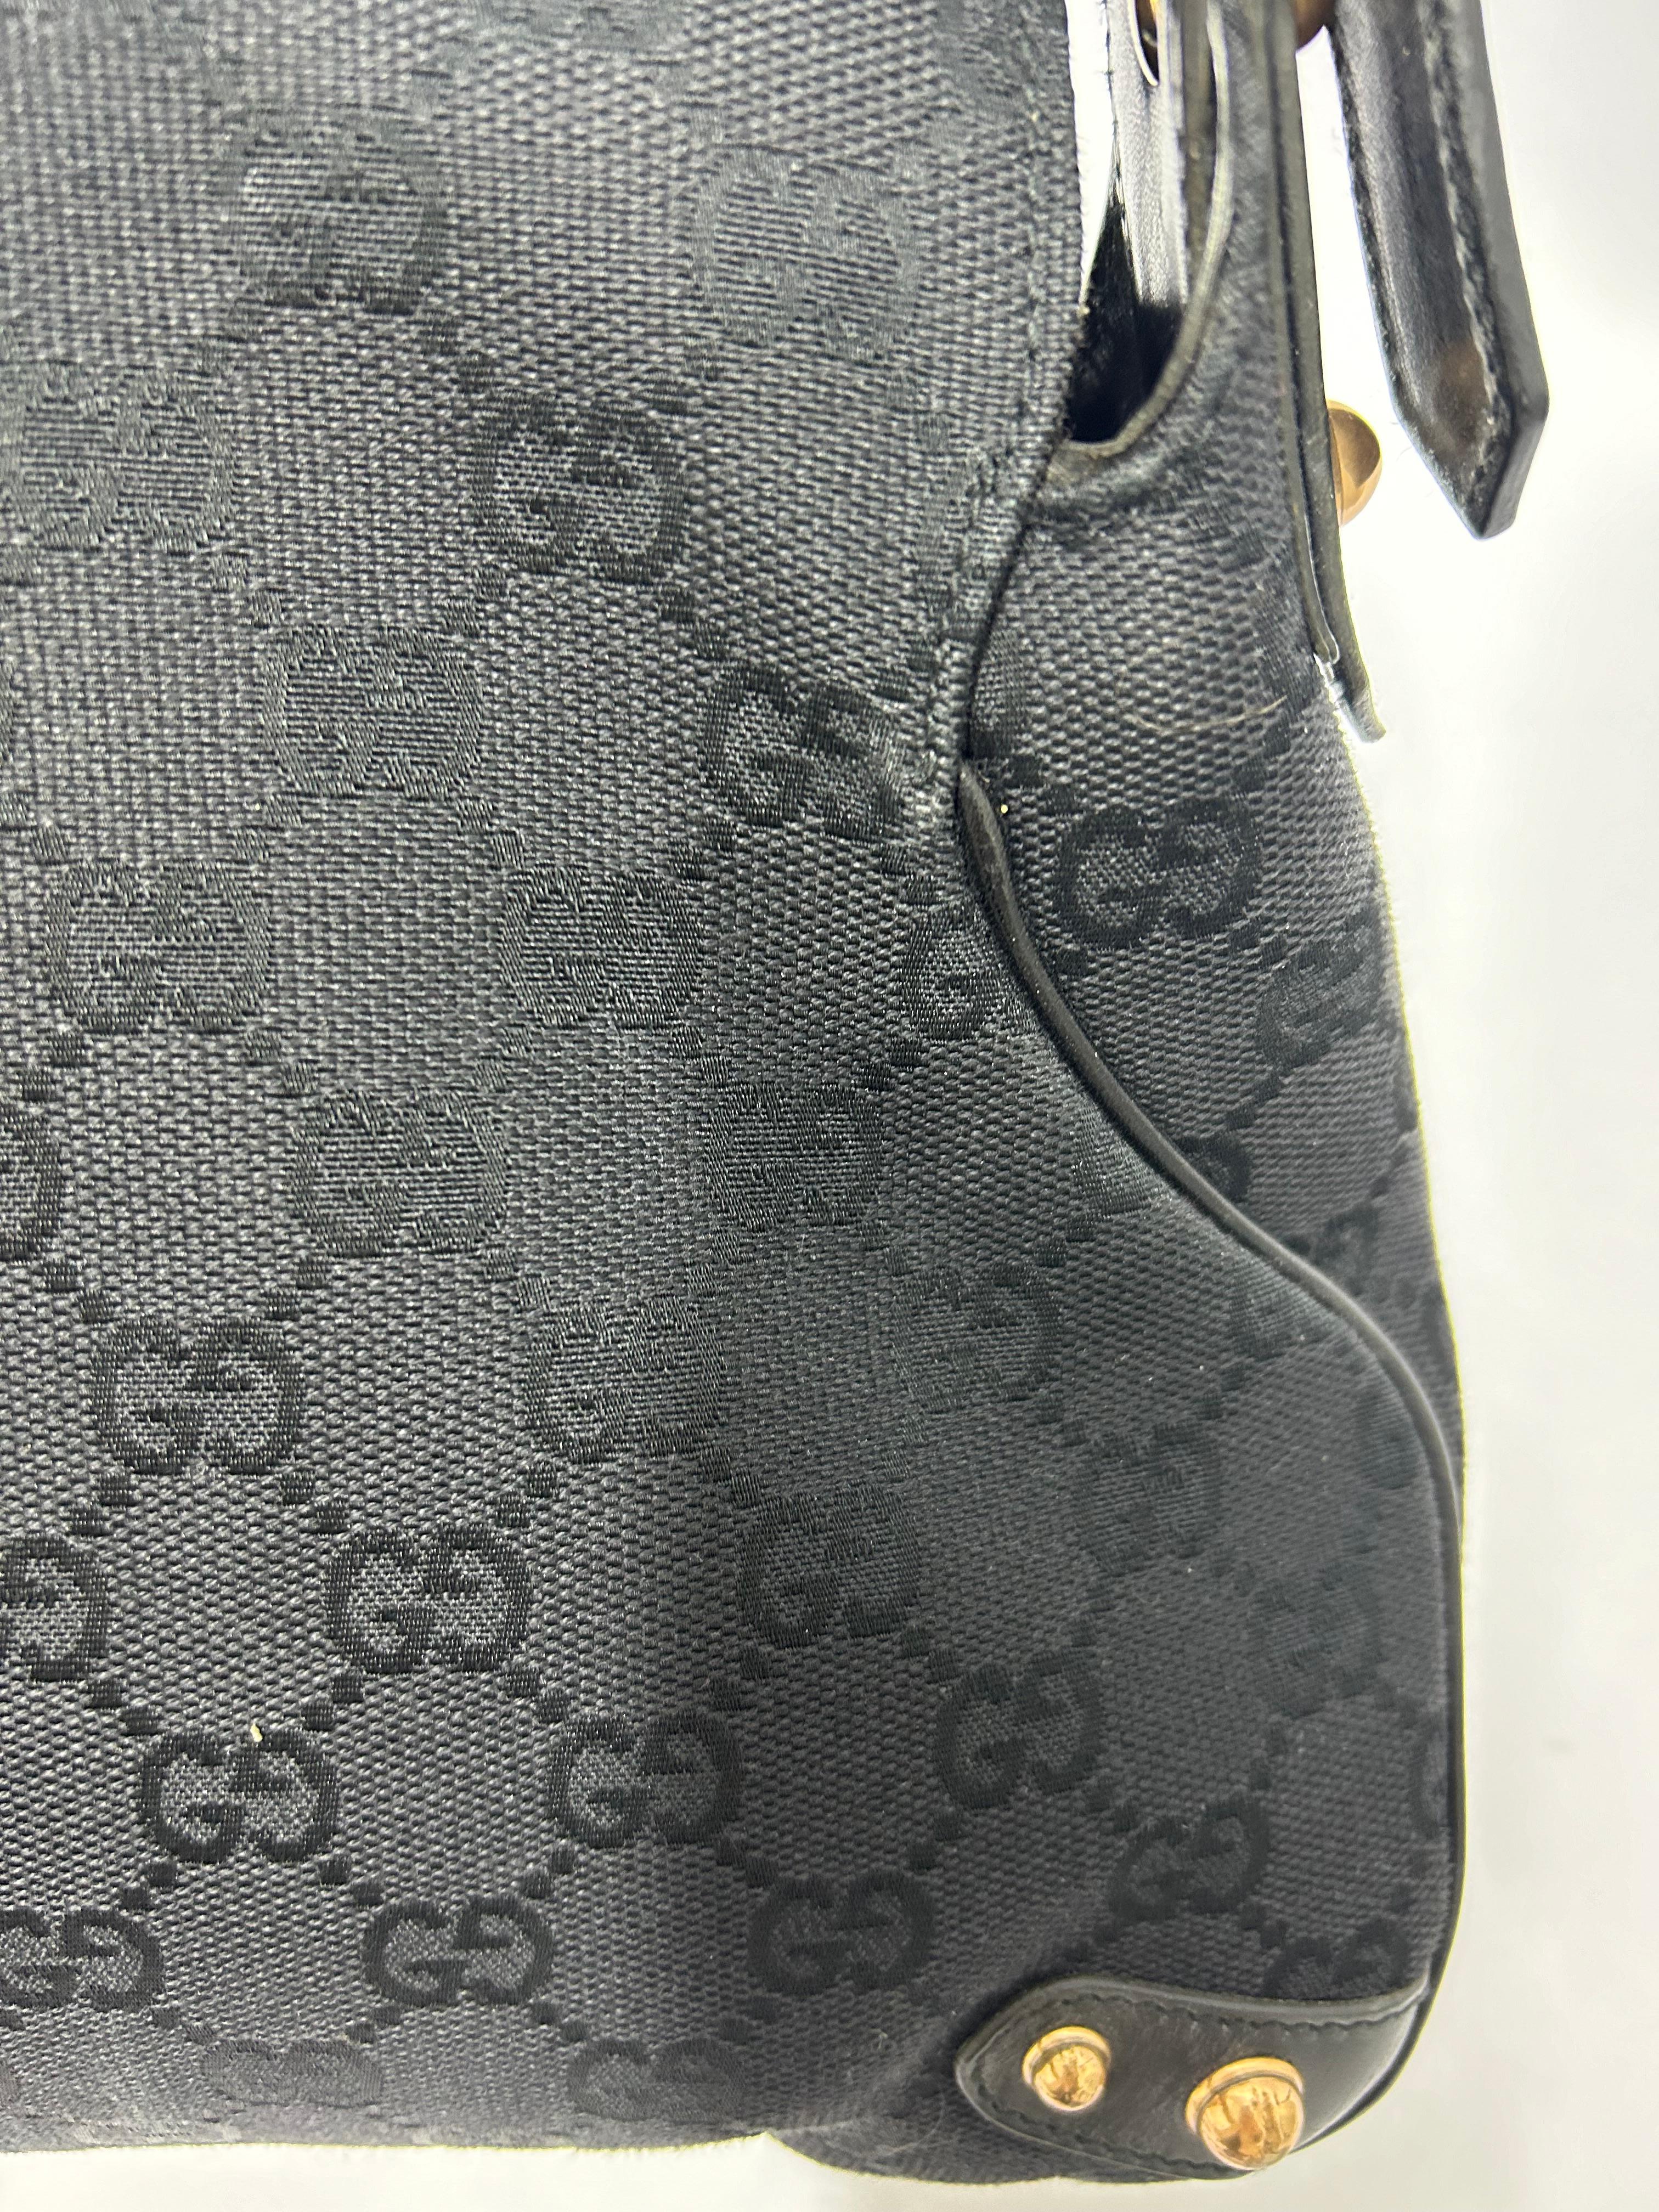 Gucci Horsebit Shoulder Bag For Sale 9